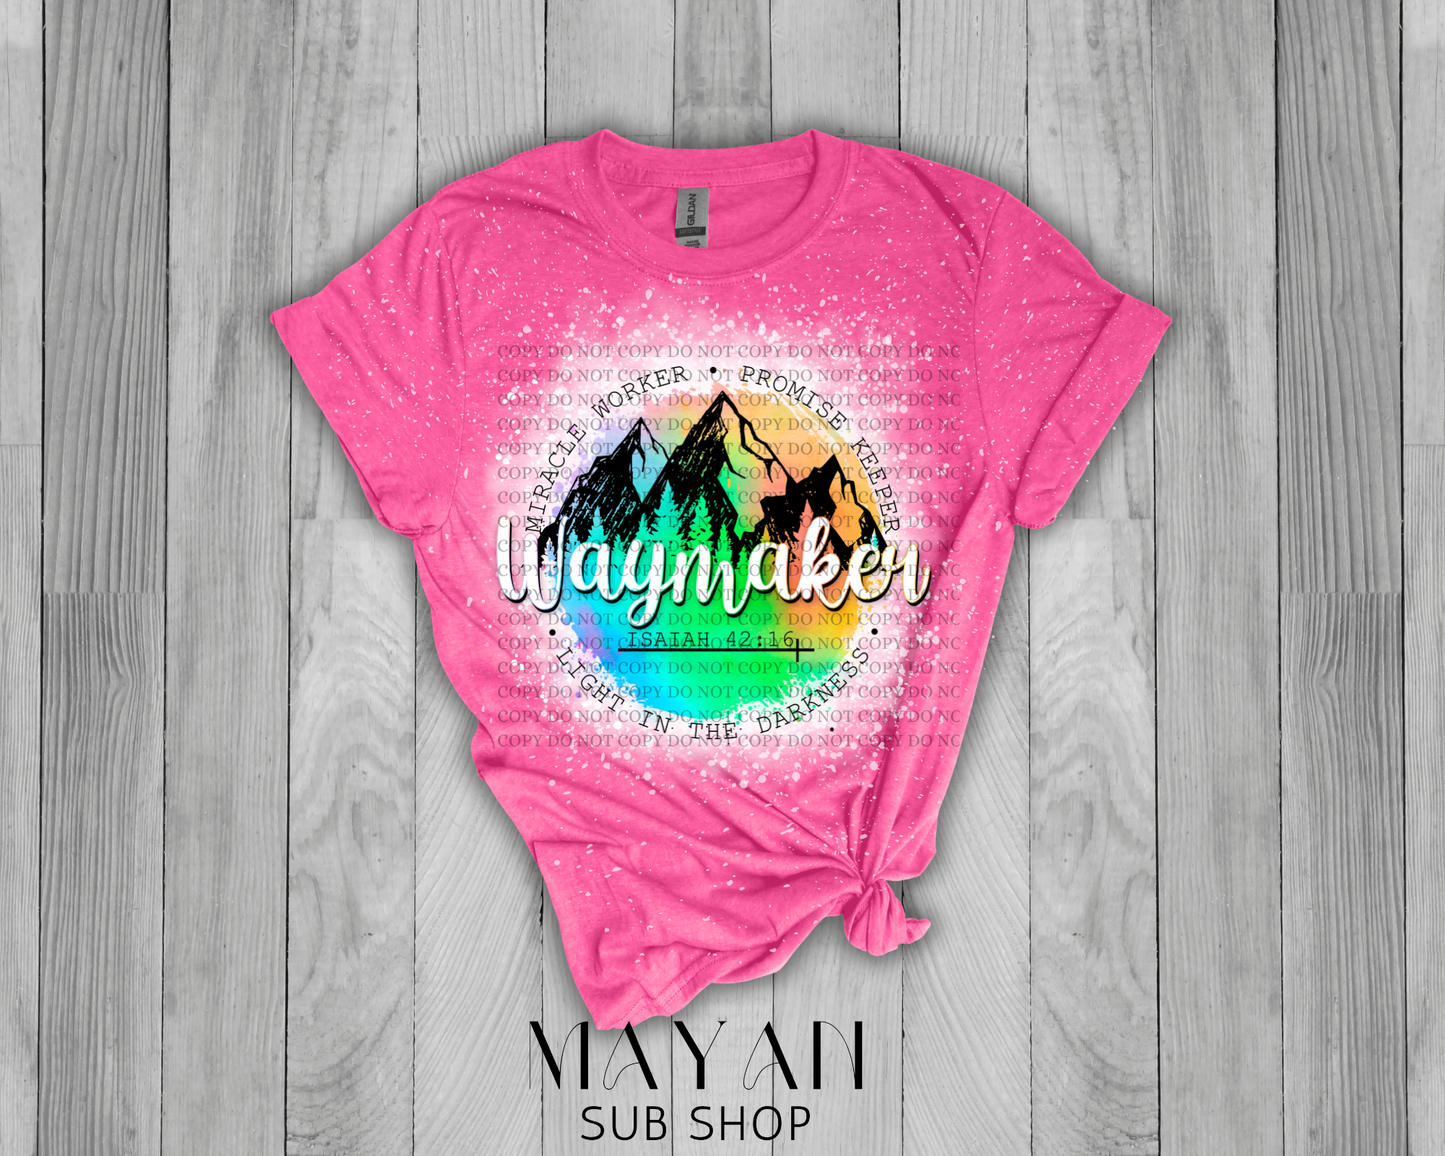 Way Maker Bleached Shirt - Mayan Sub Shop